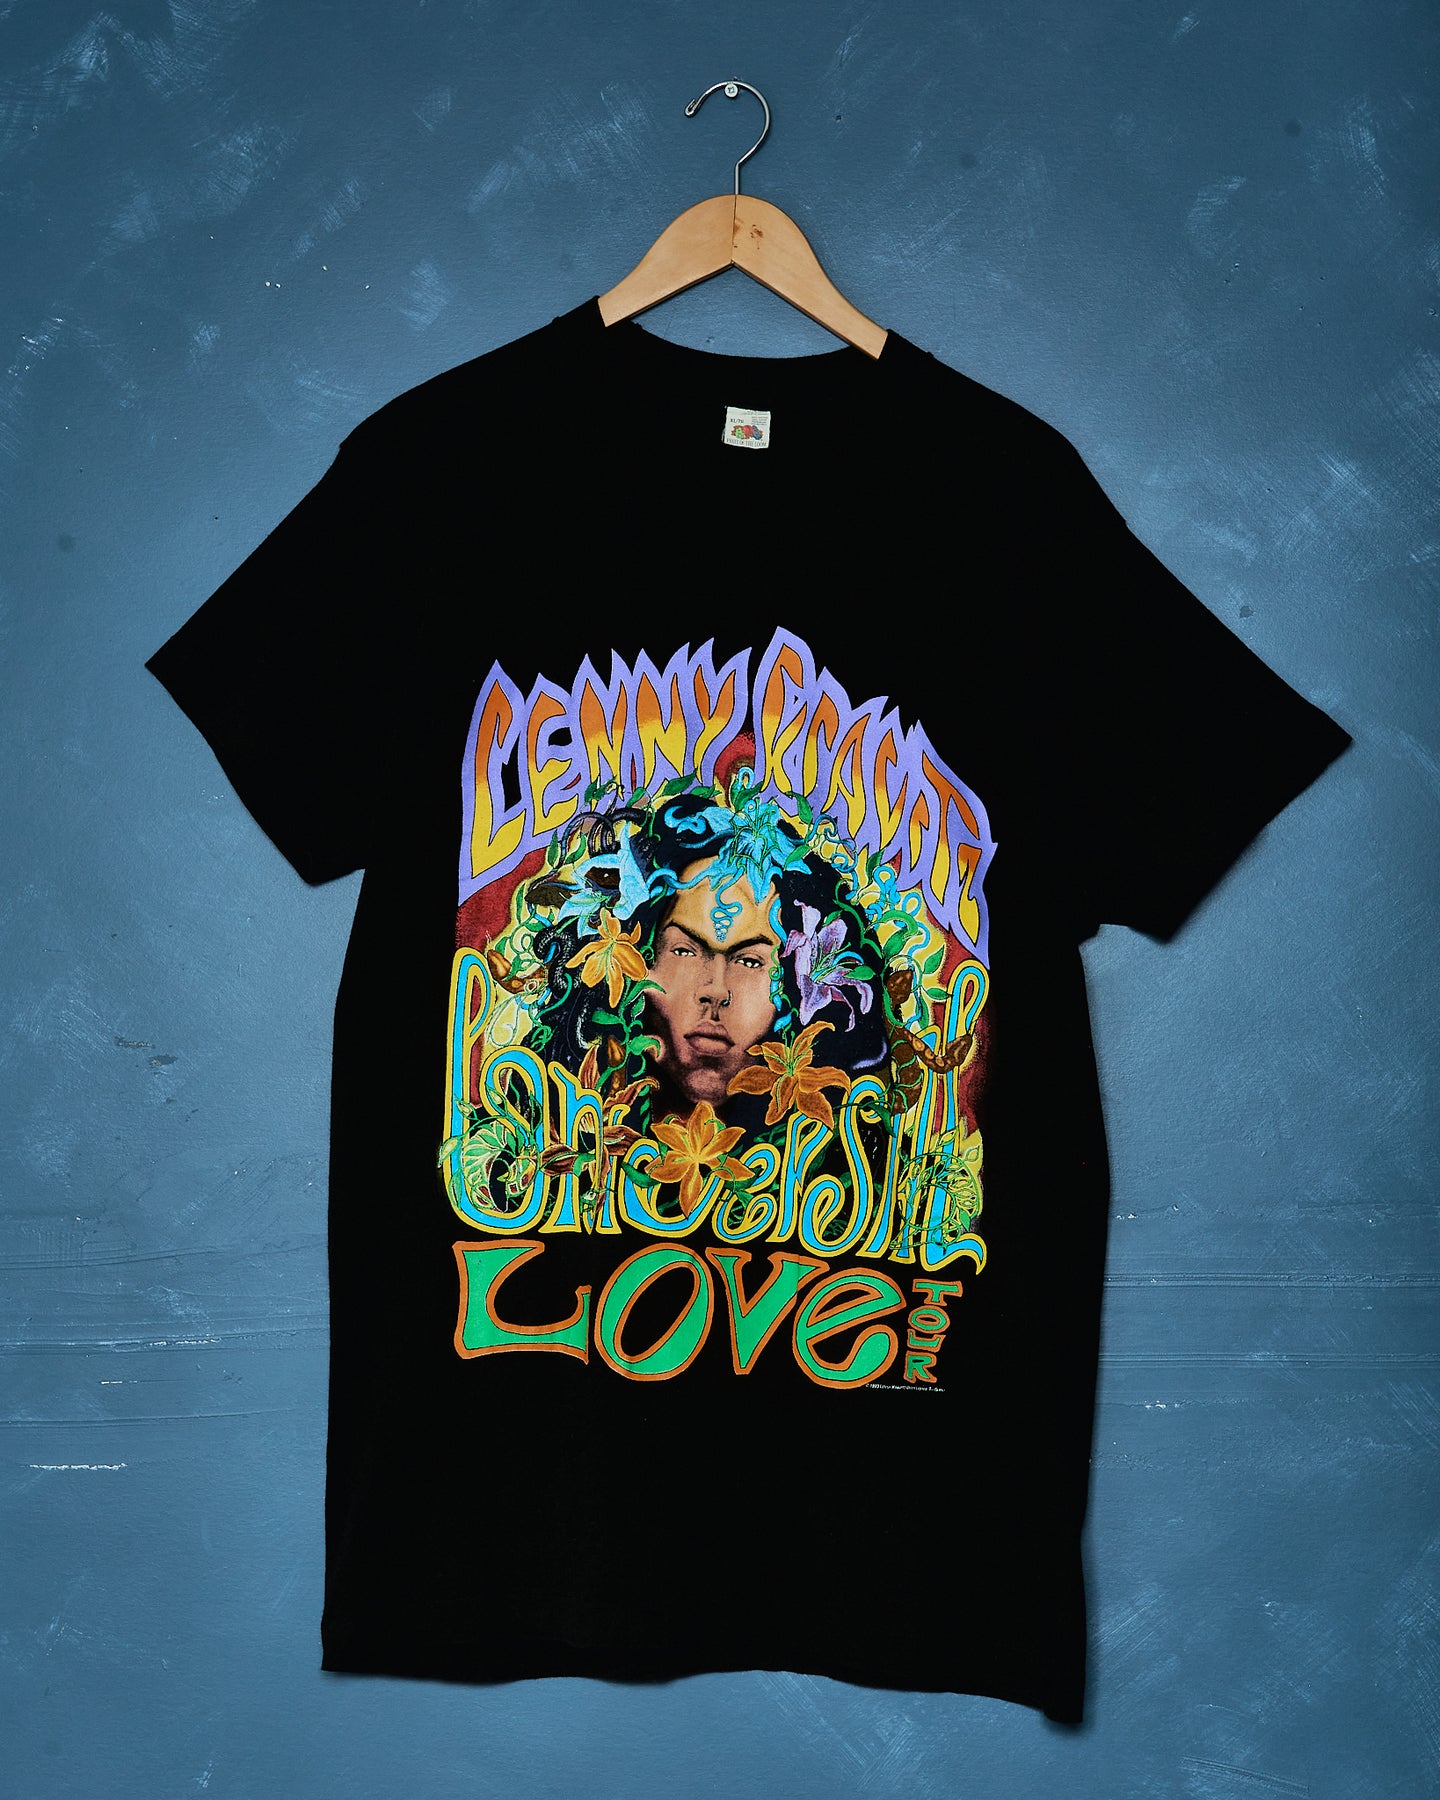 1993 Lenny Kravitz Universal Love Tour